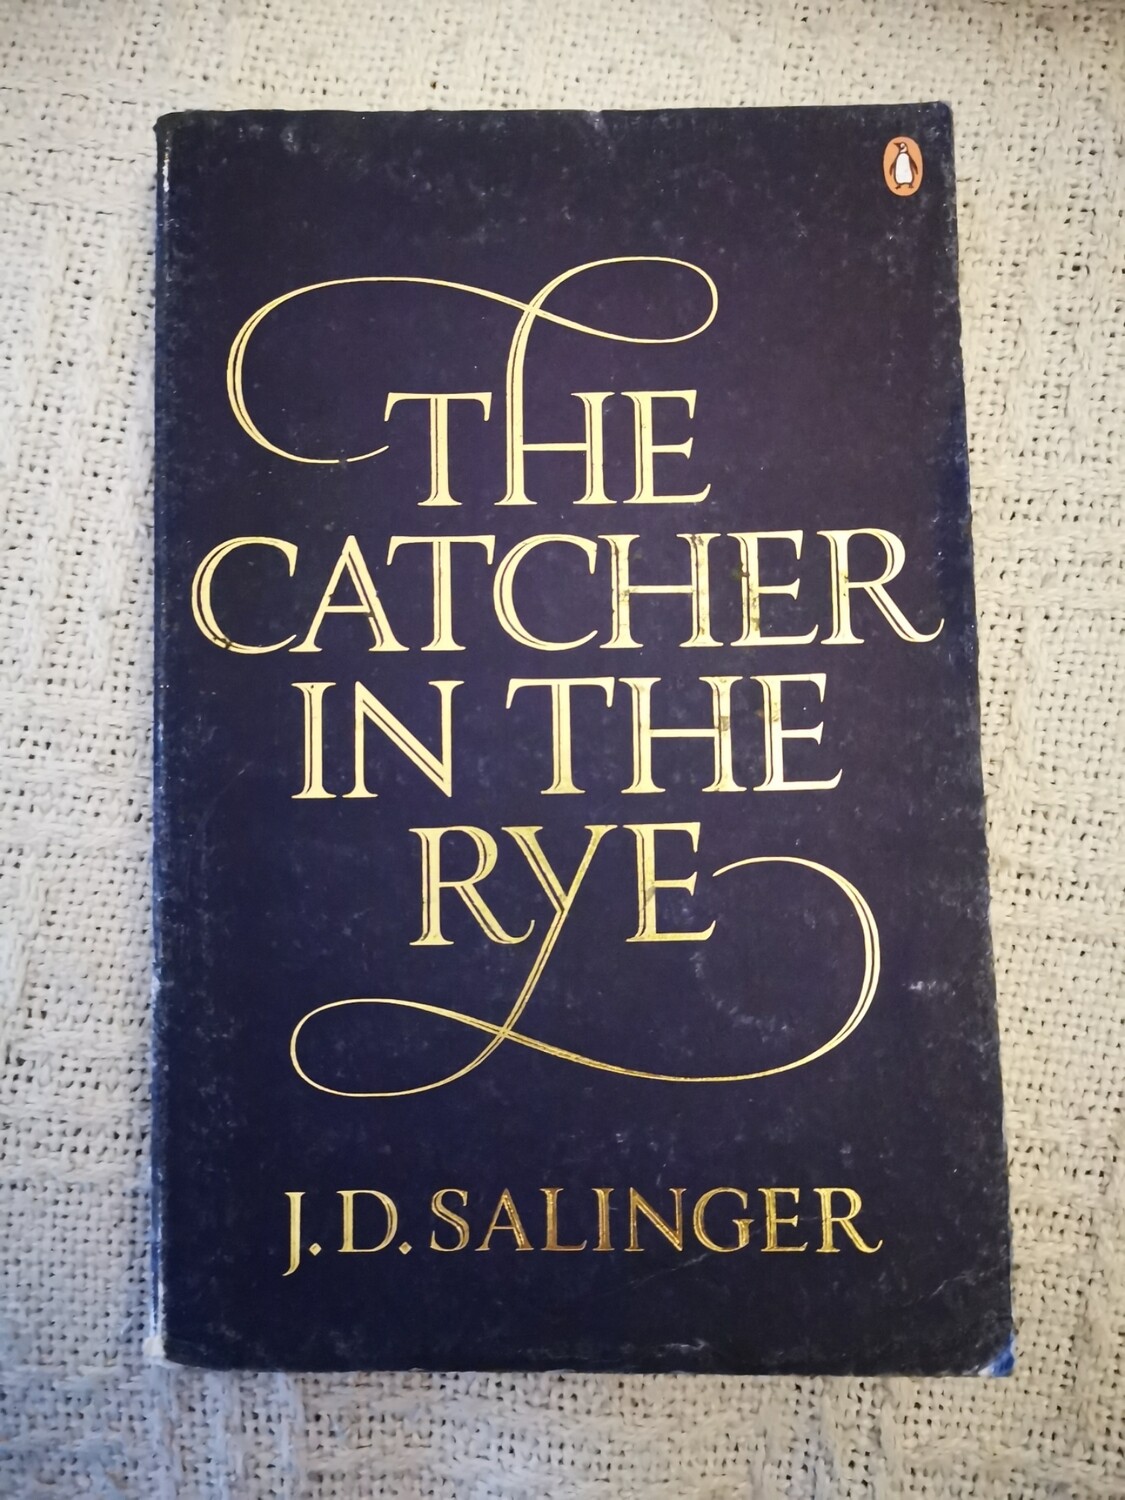 The catcher in the rye, J. D. Salinger